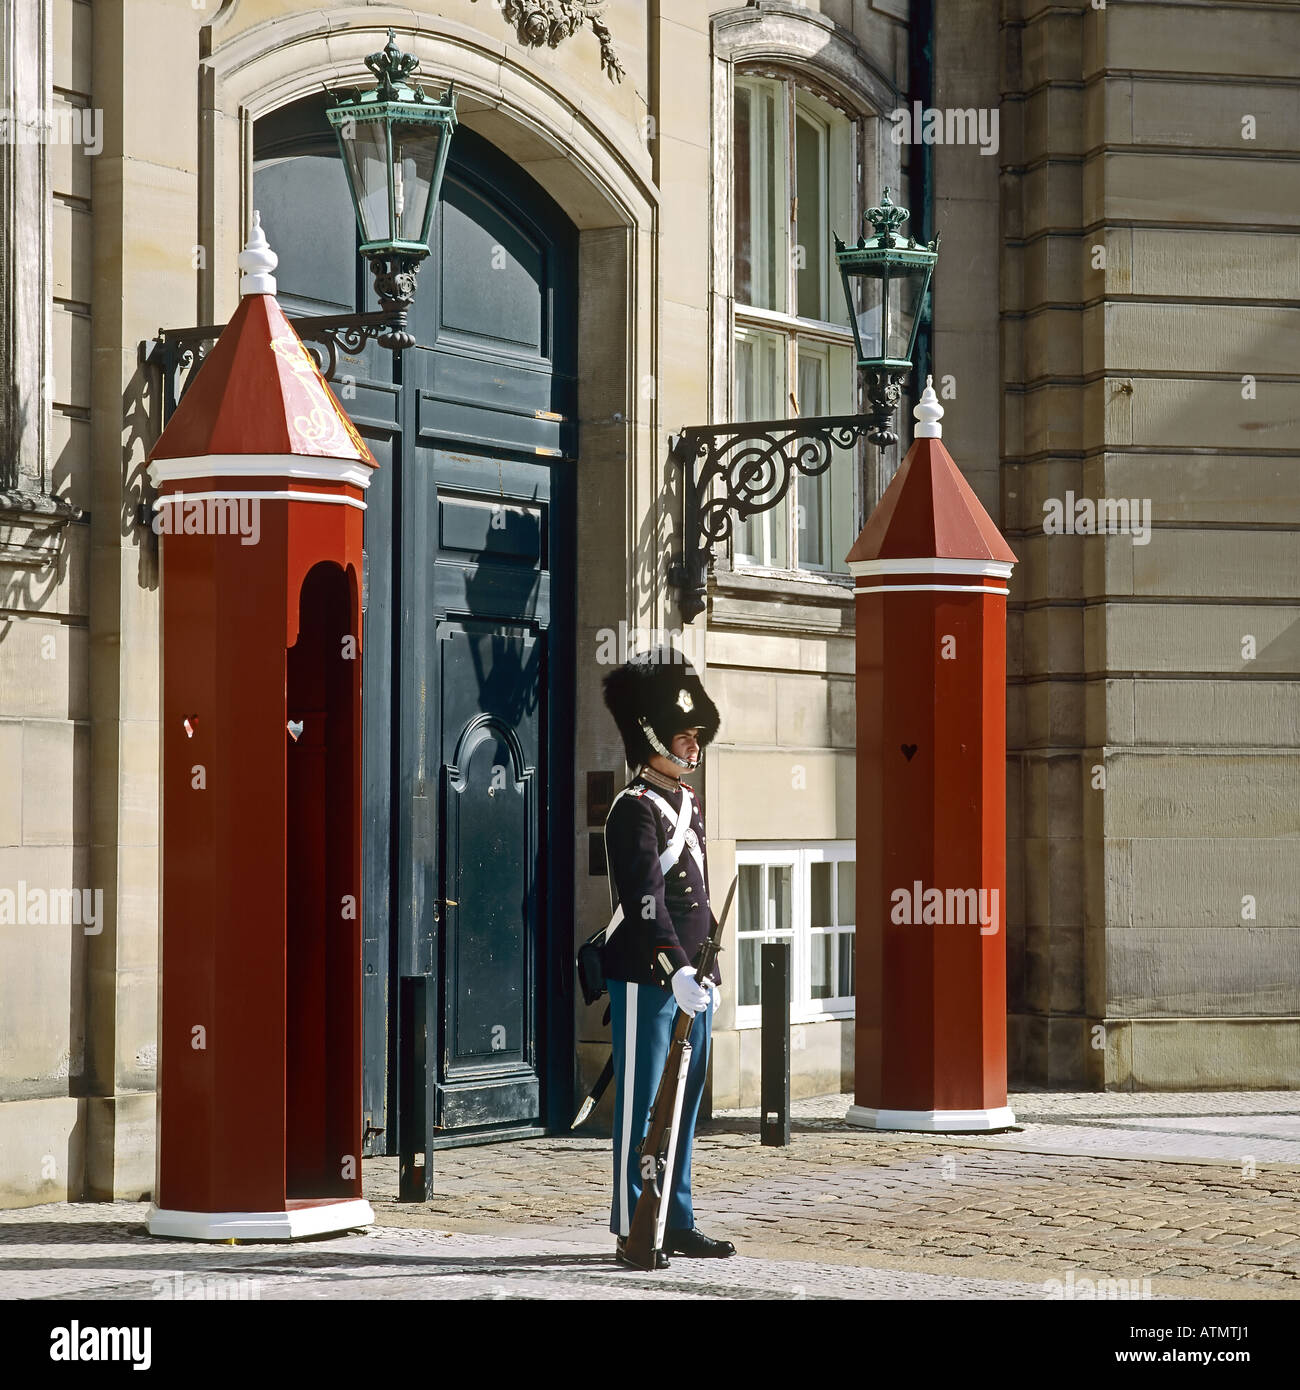 Royal life guard and sentry boxes, Amalienborg palace, Copenhagen, Denmark Stock Photo